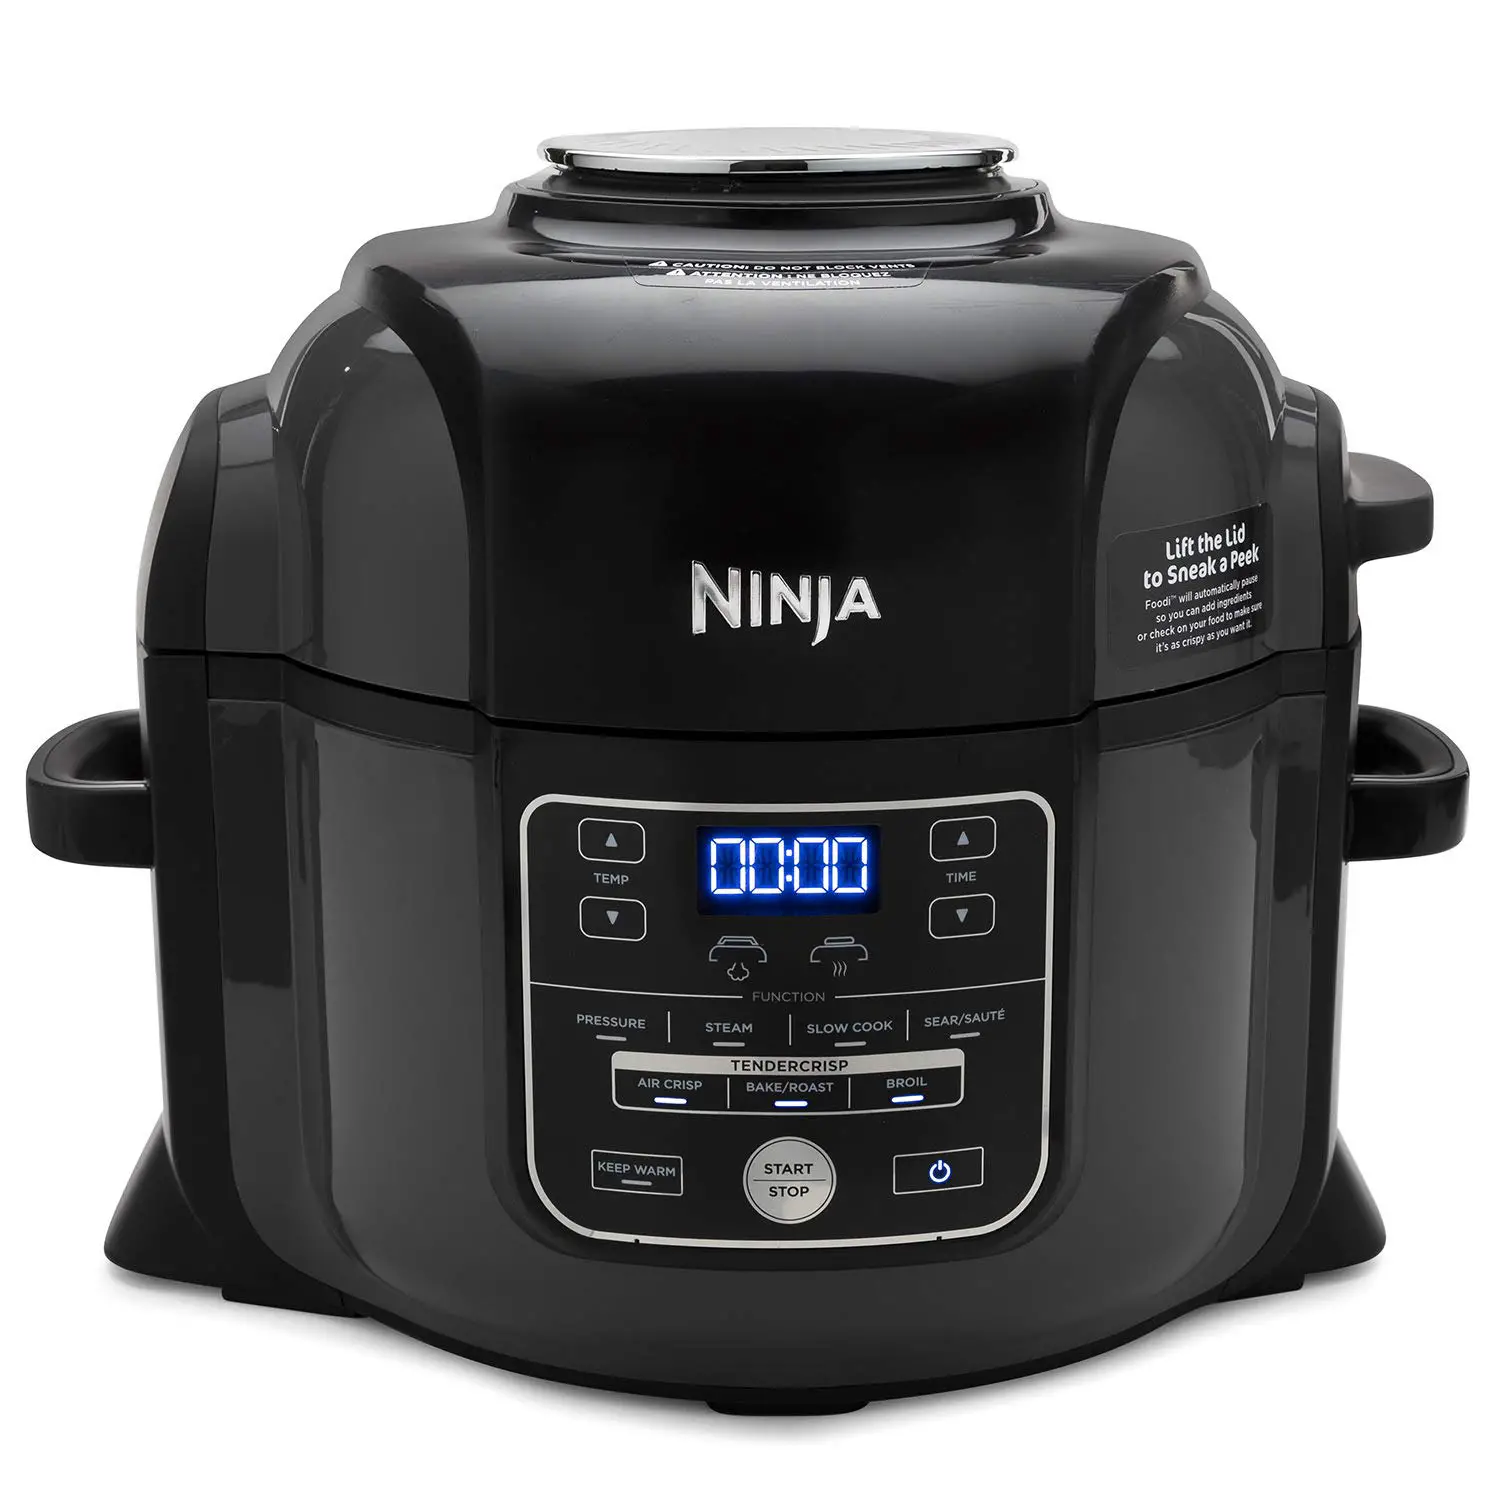 Ninja Cooker237 Pressure Cooker, 6.5 quart, Black (Renewed ...